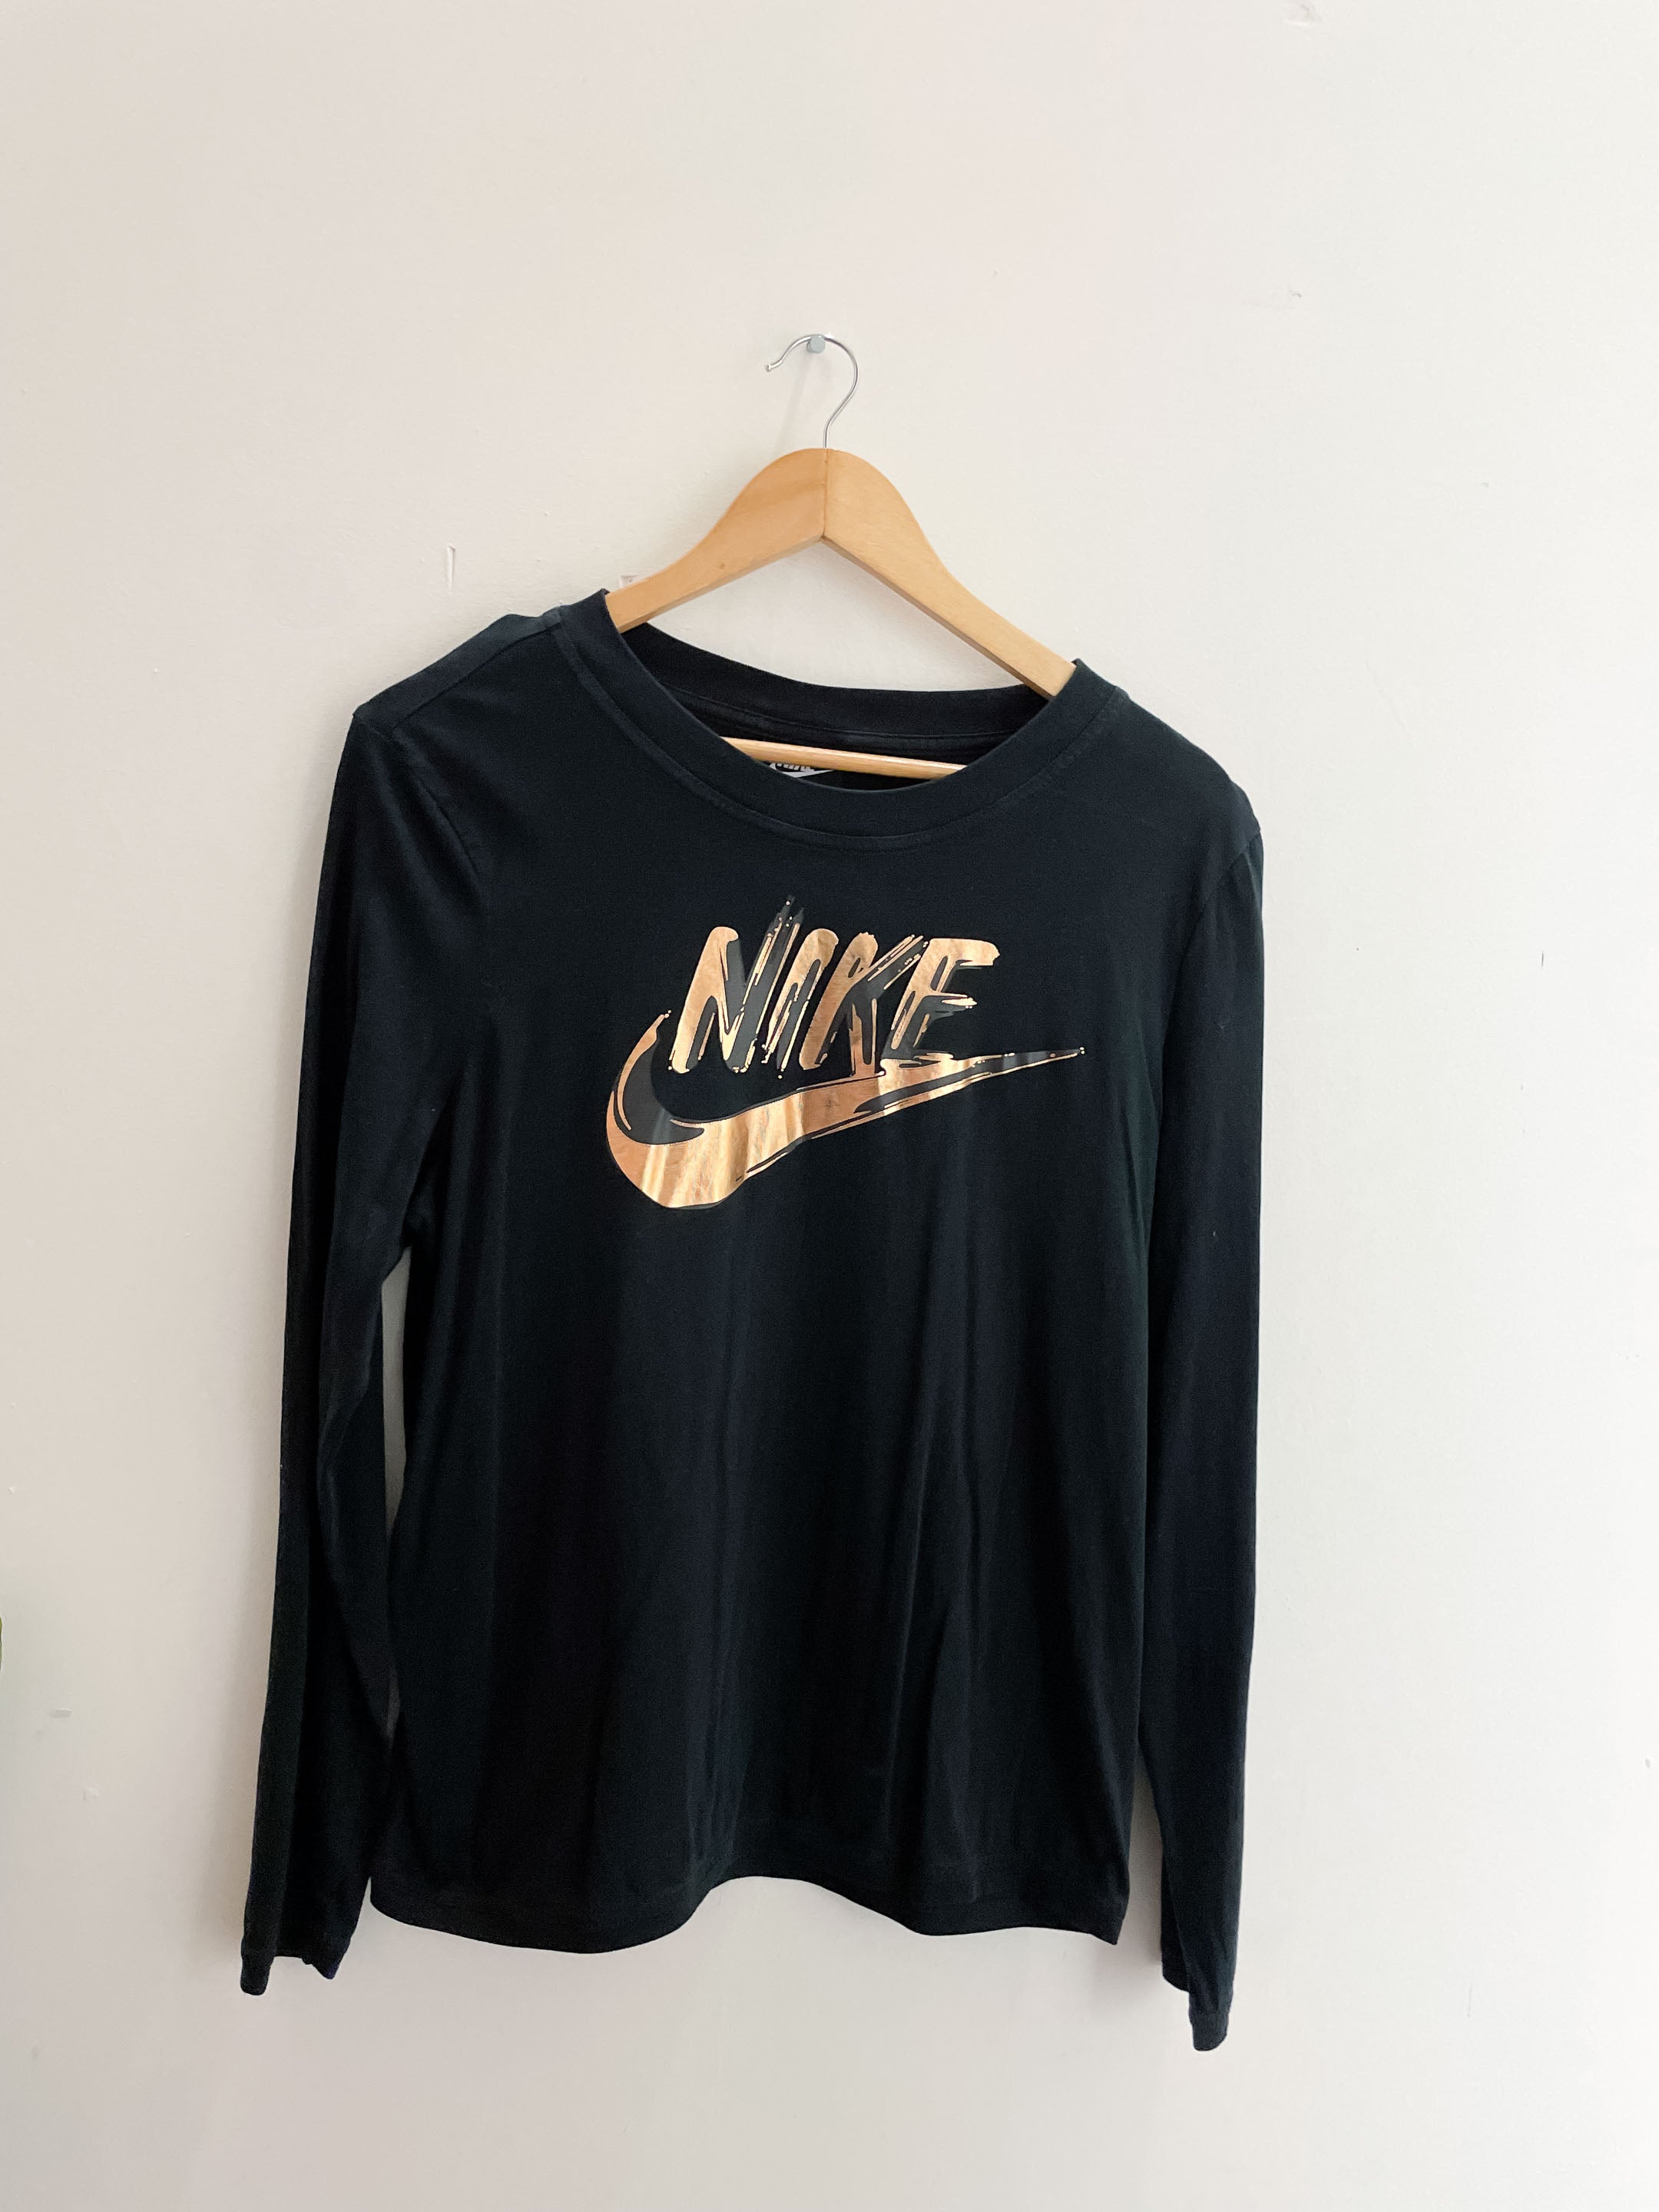 Vintage Nike logo print large Long sleeved black top